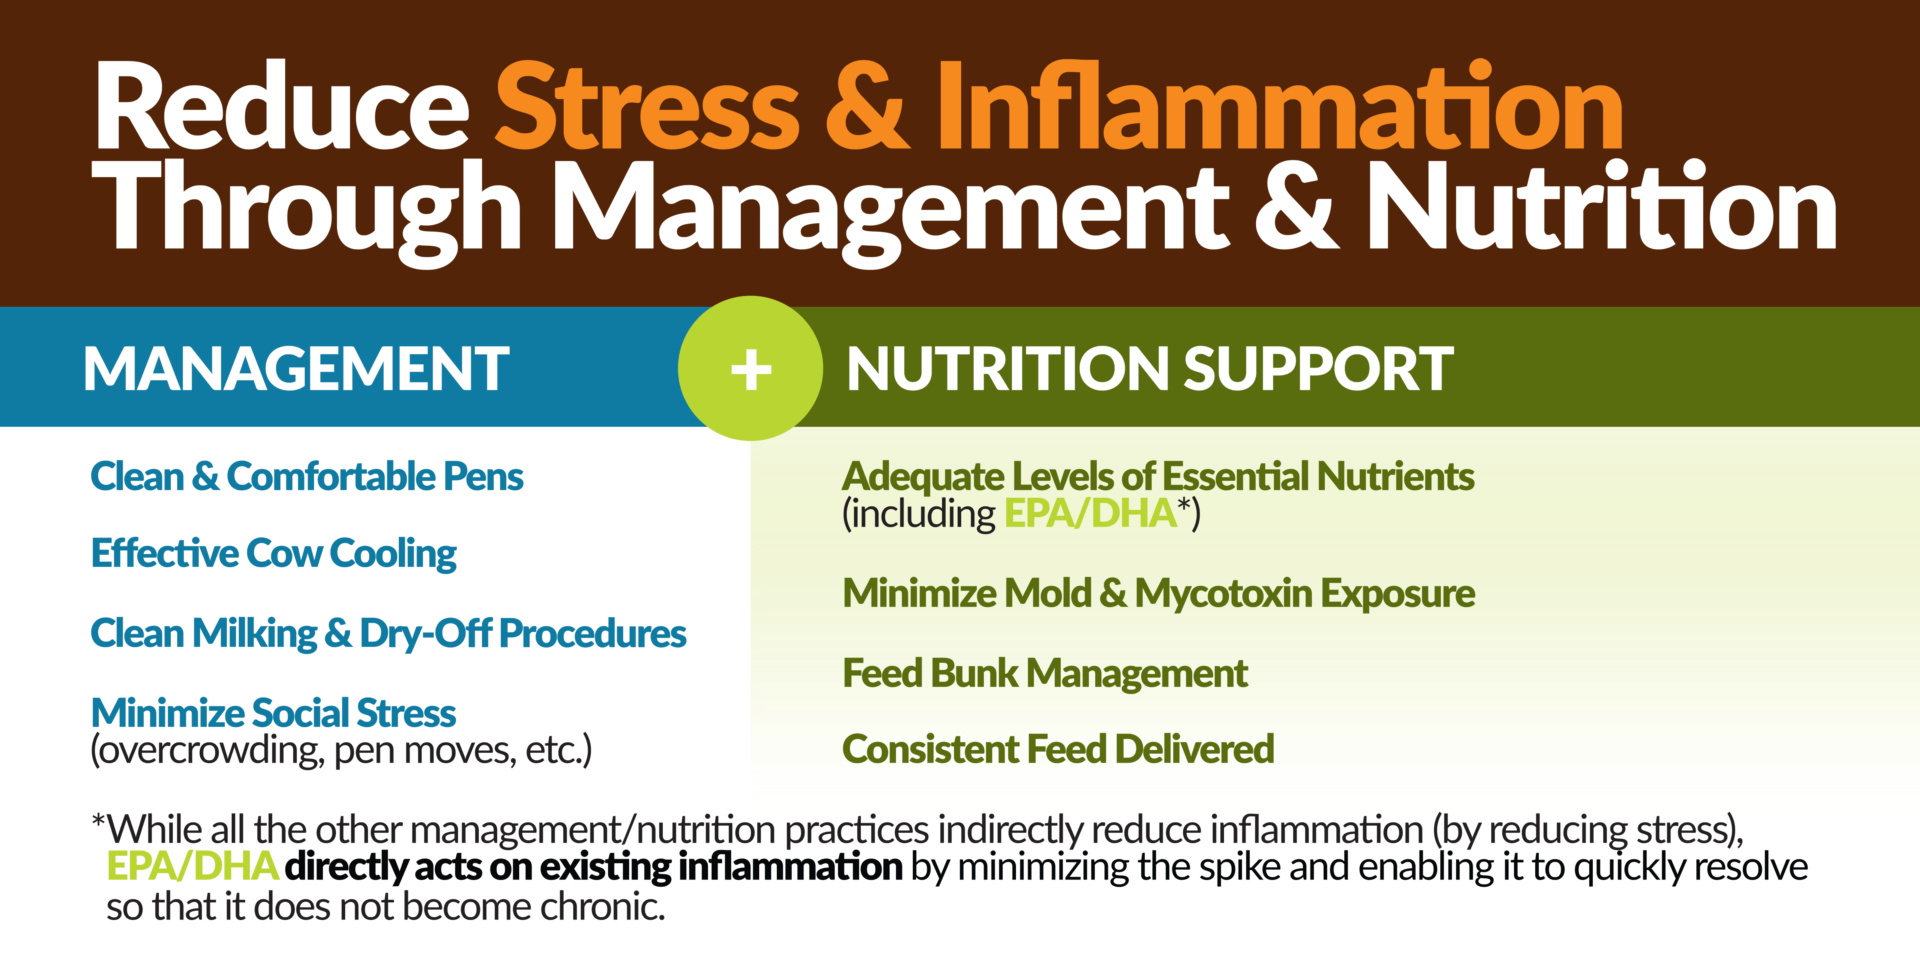 Reduce Stress & Inflammation Through Management & Nutrition